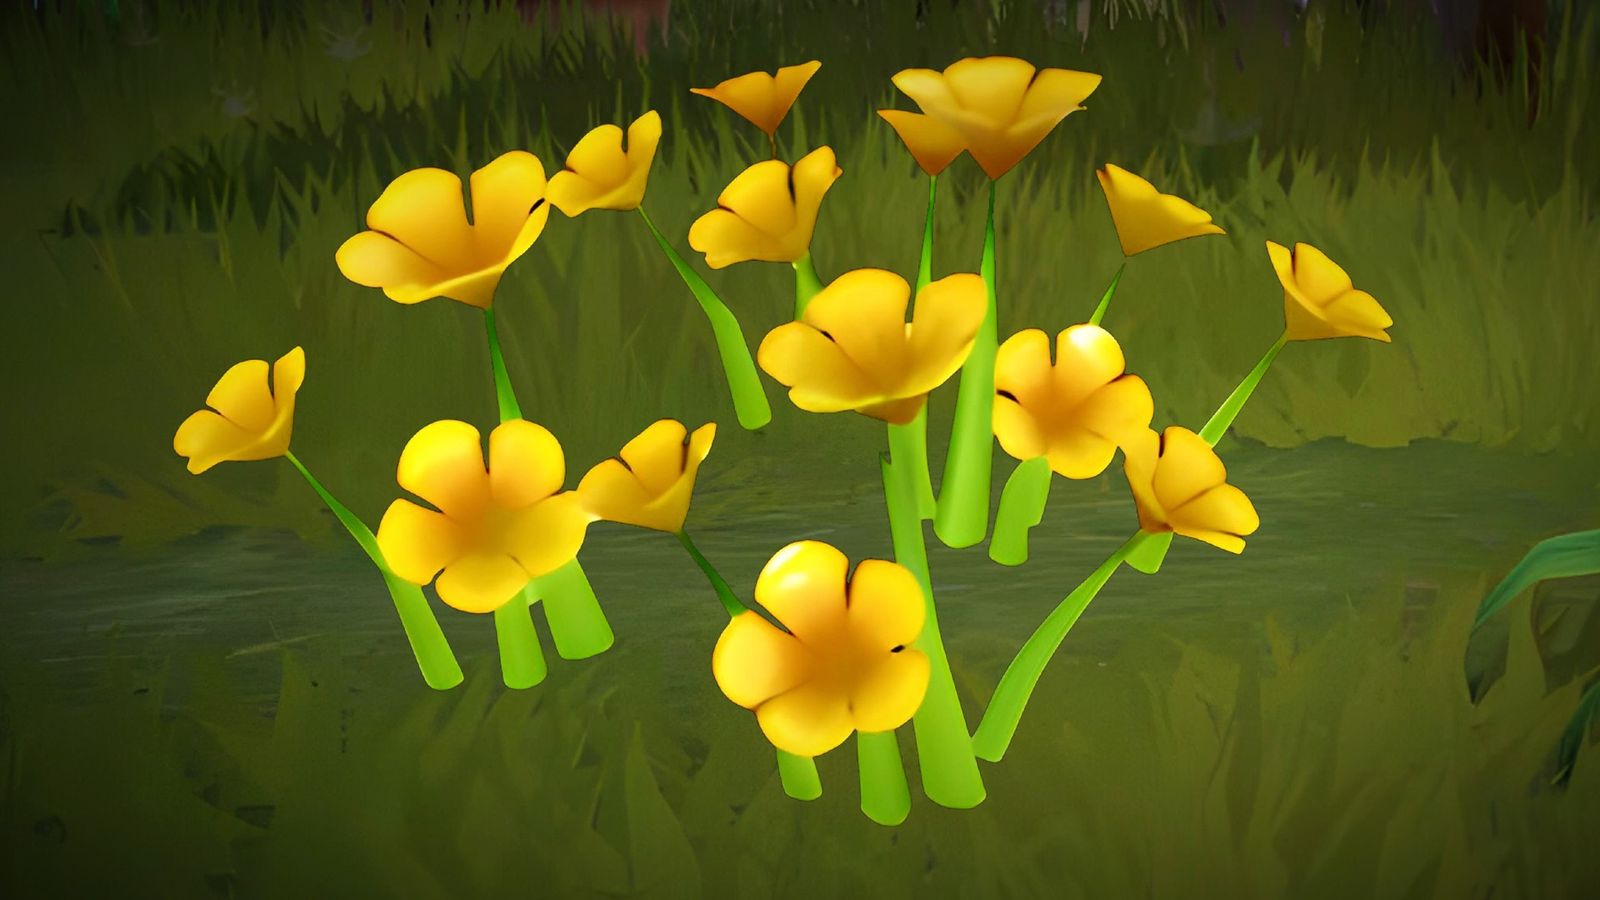 Disney Dreamlight Valley - Yellow Nasturtium flowers